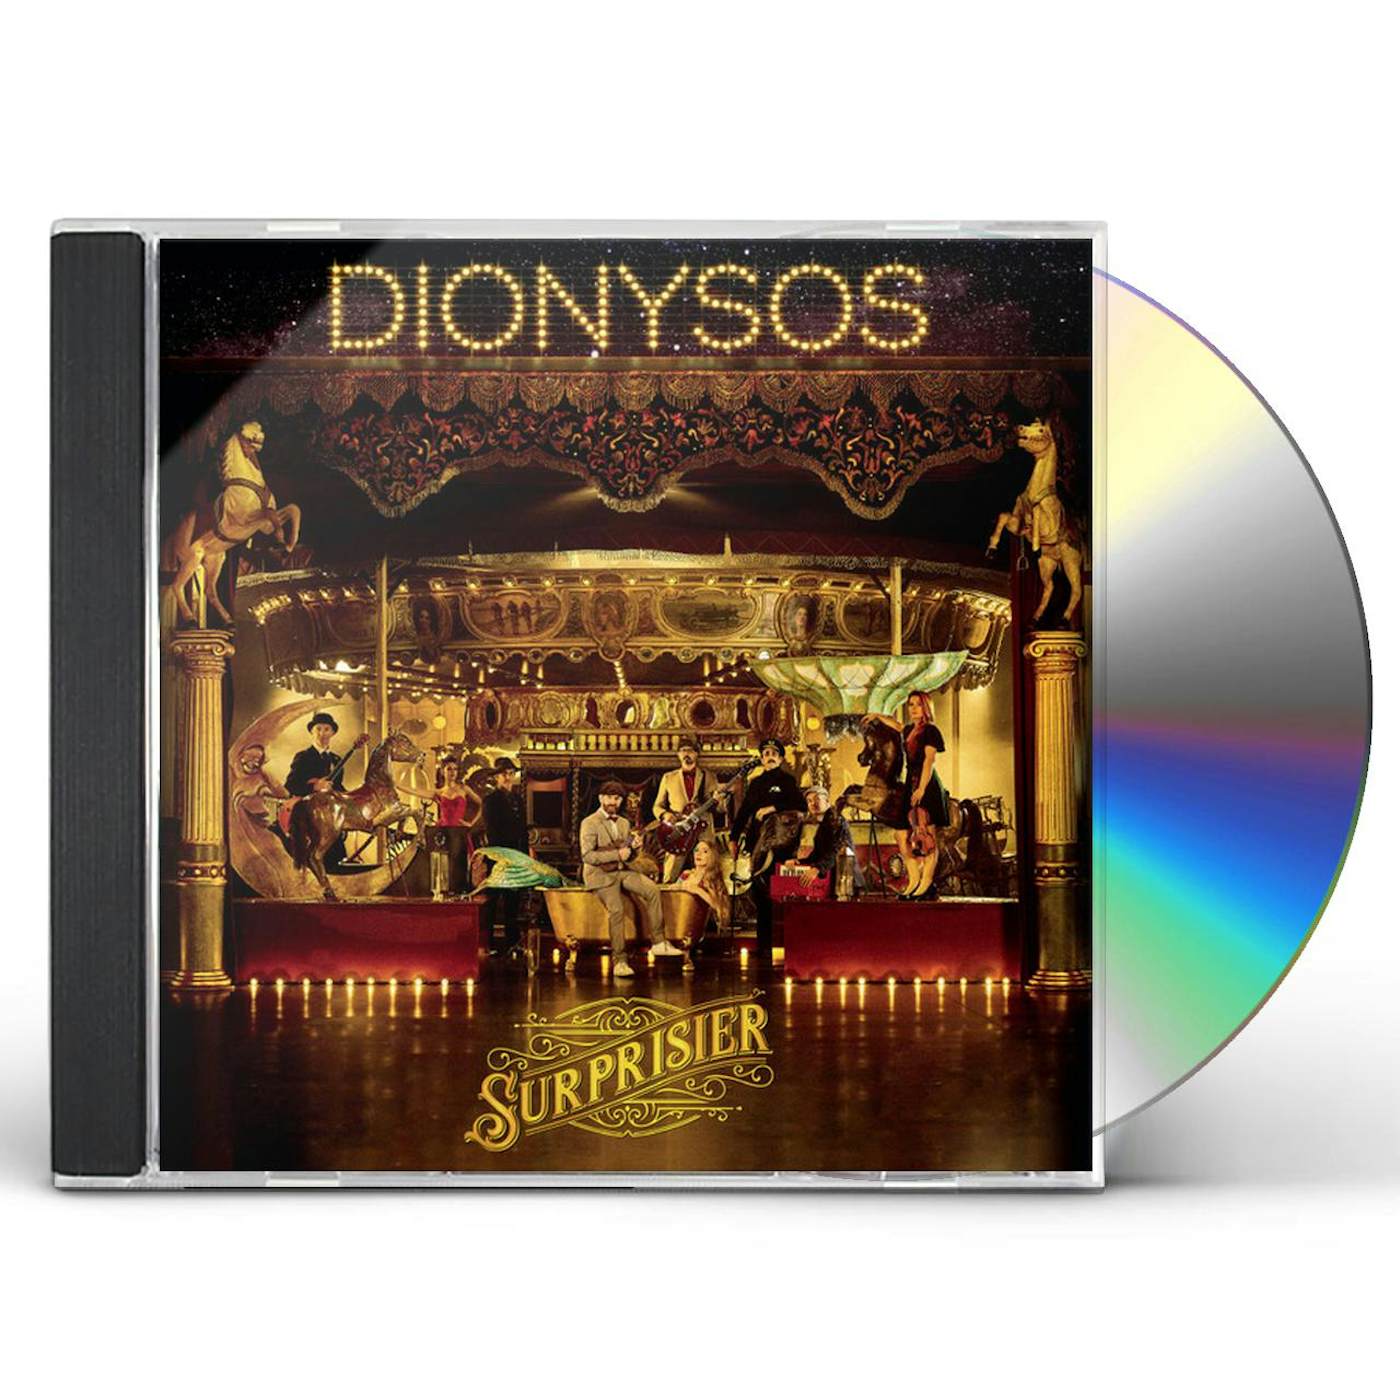 Dionysos SURPRISIER CD